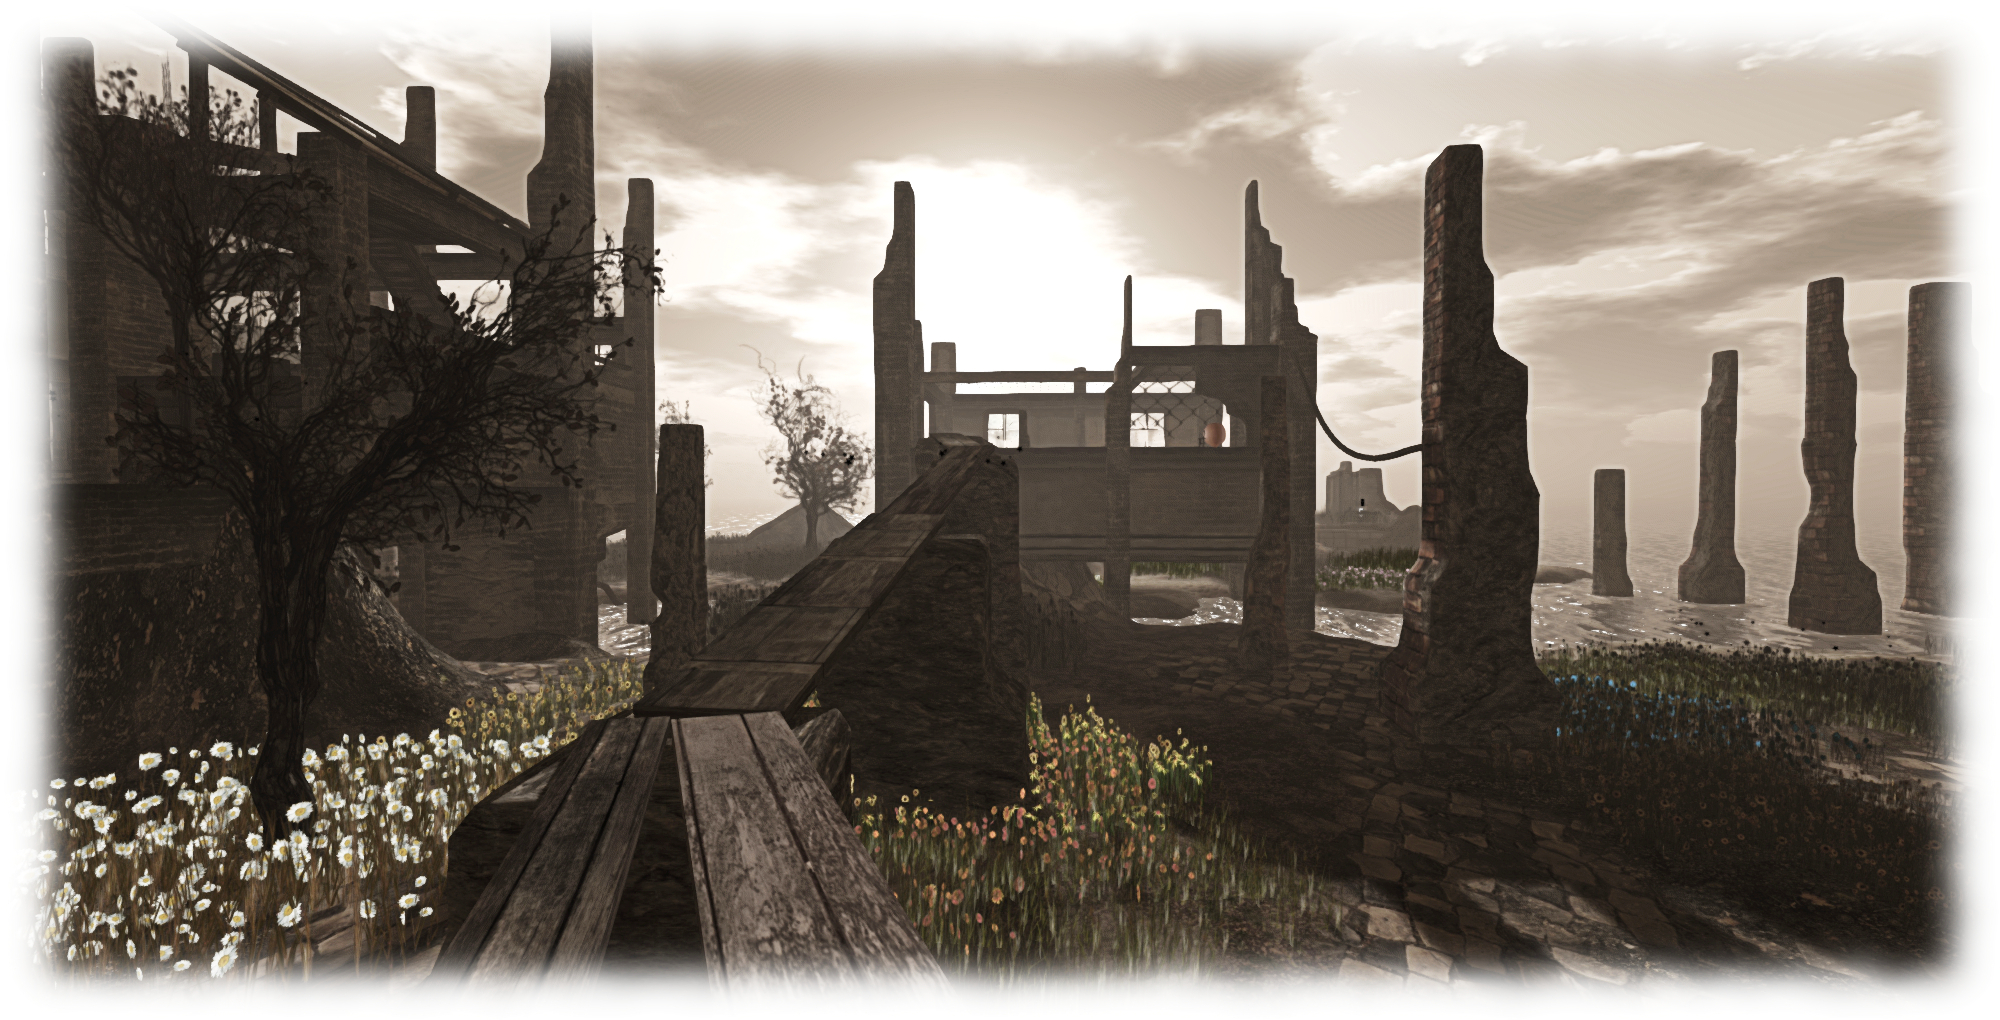 Ruins, Wondering Dew; Inara Pey, March 2015, on Flickr